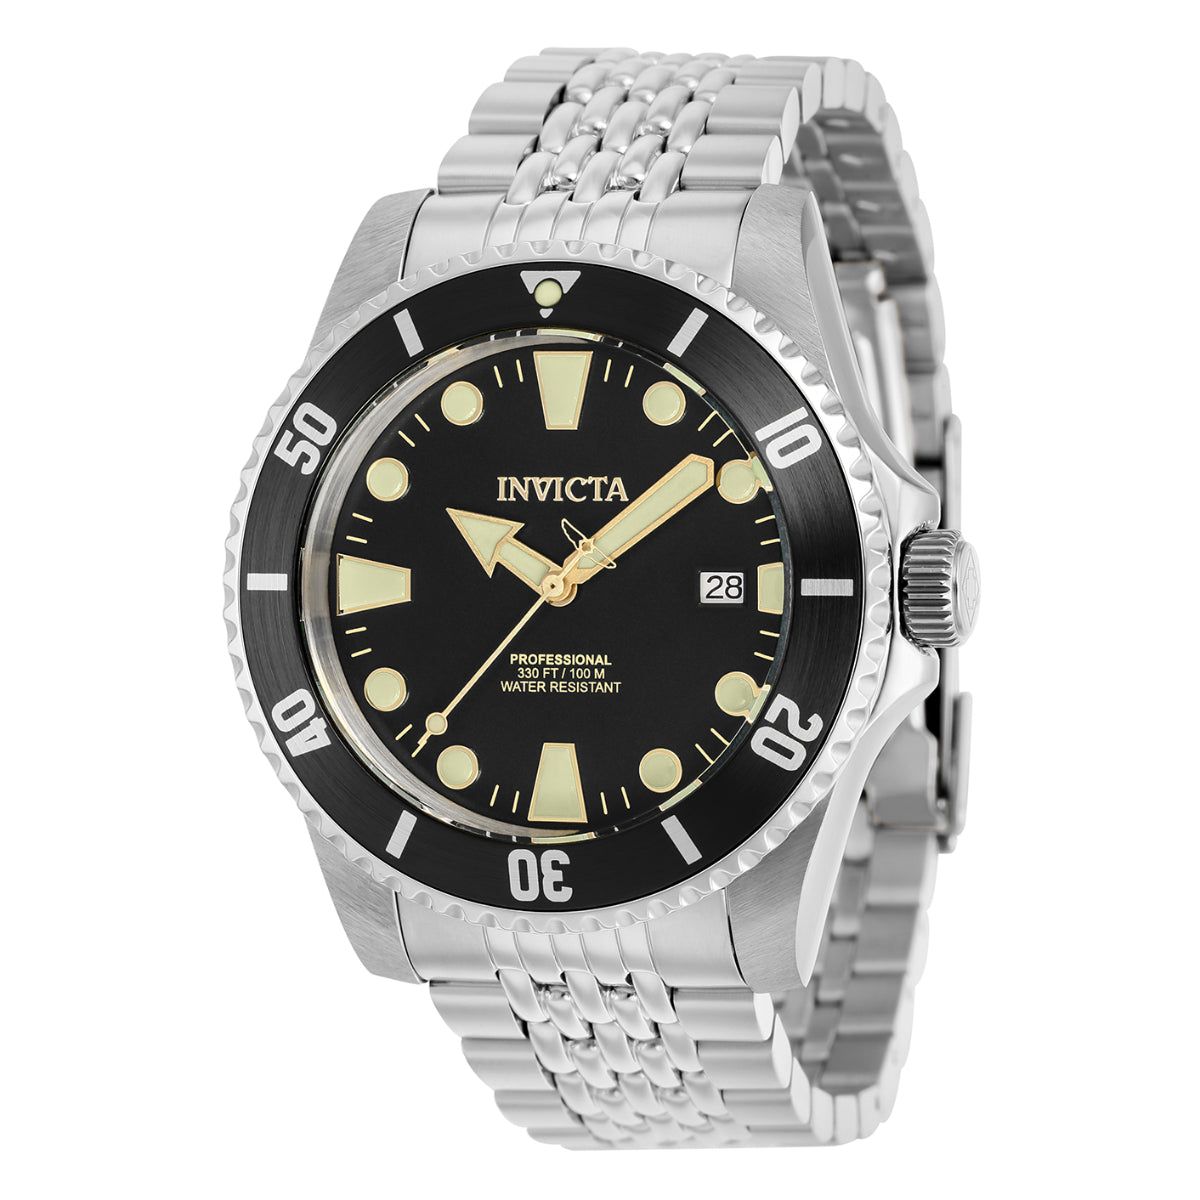 INVICTA Men's Pro Diver Automatic 44mm Silver / Black Bezel Oyster Bracelet Watch